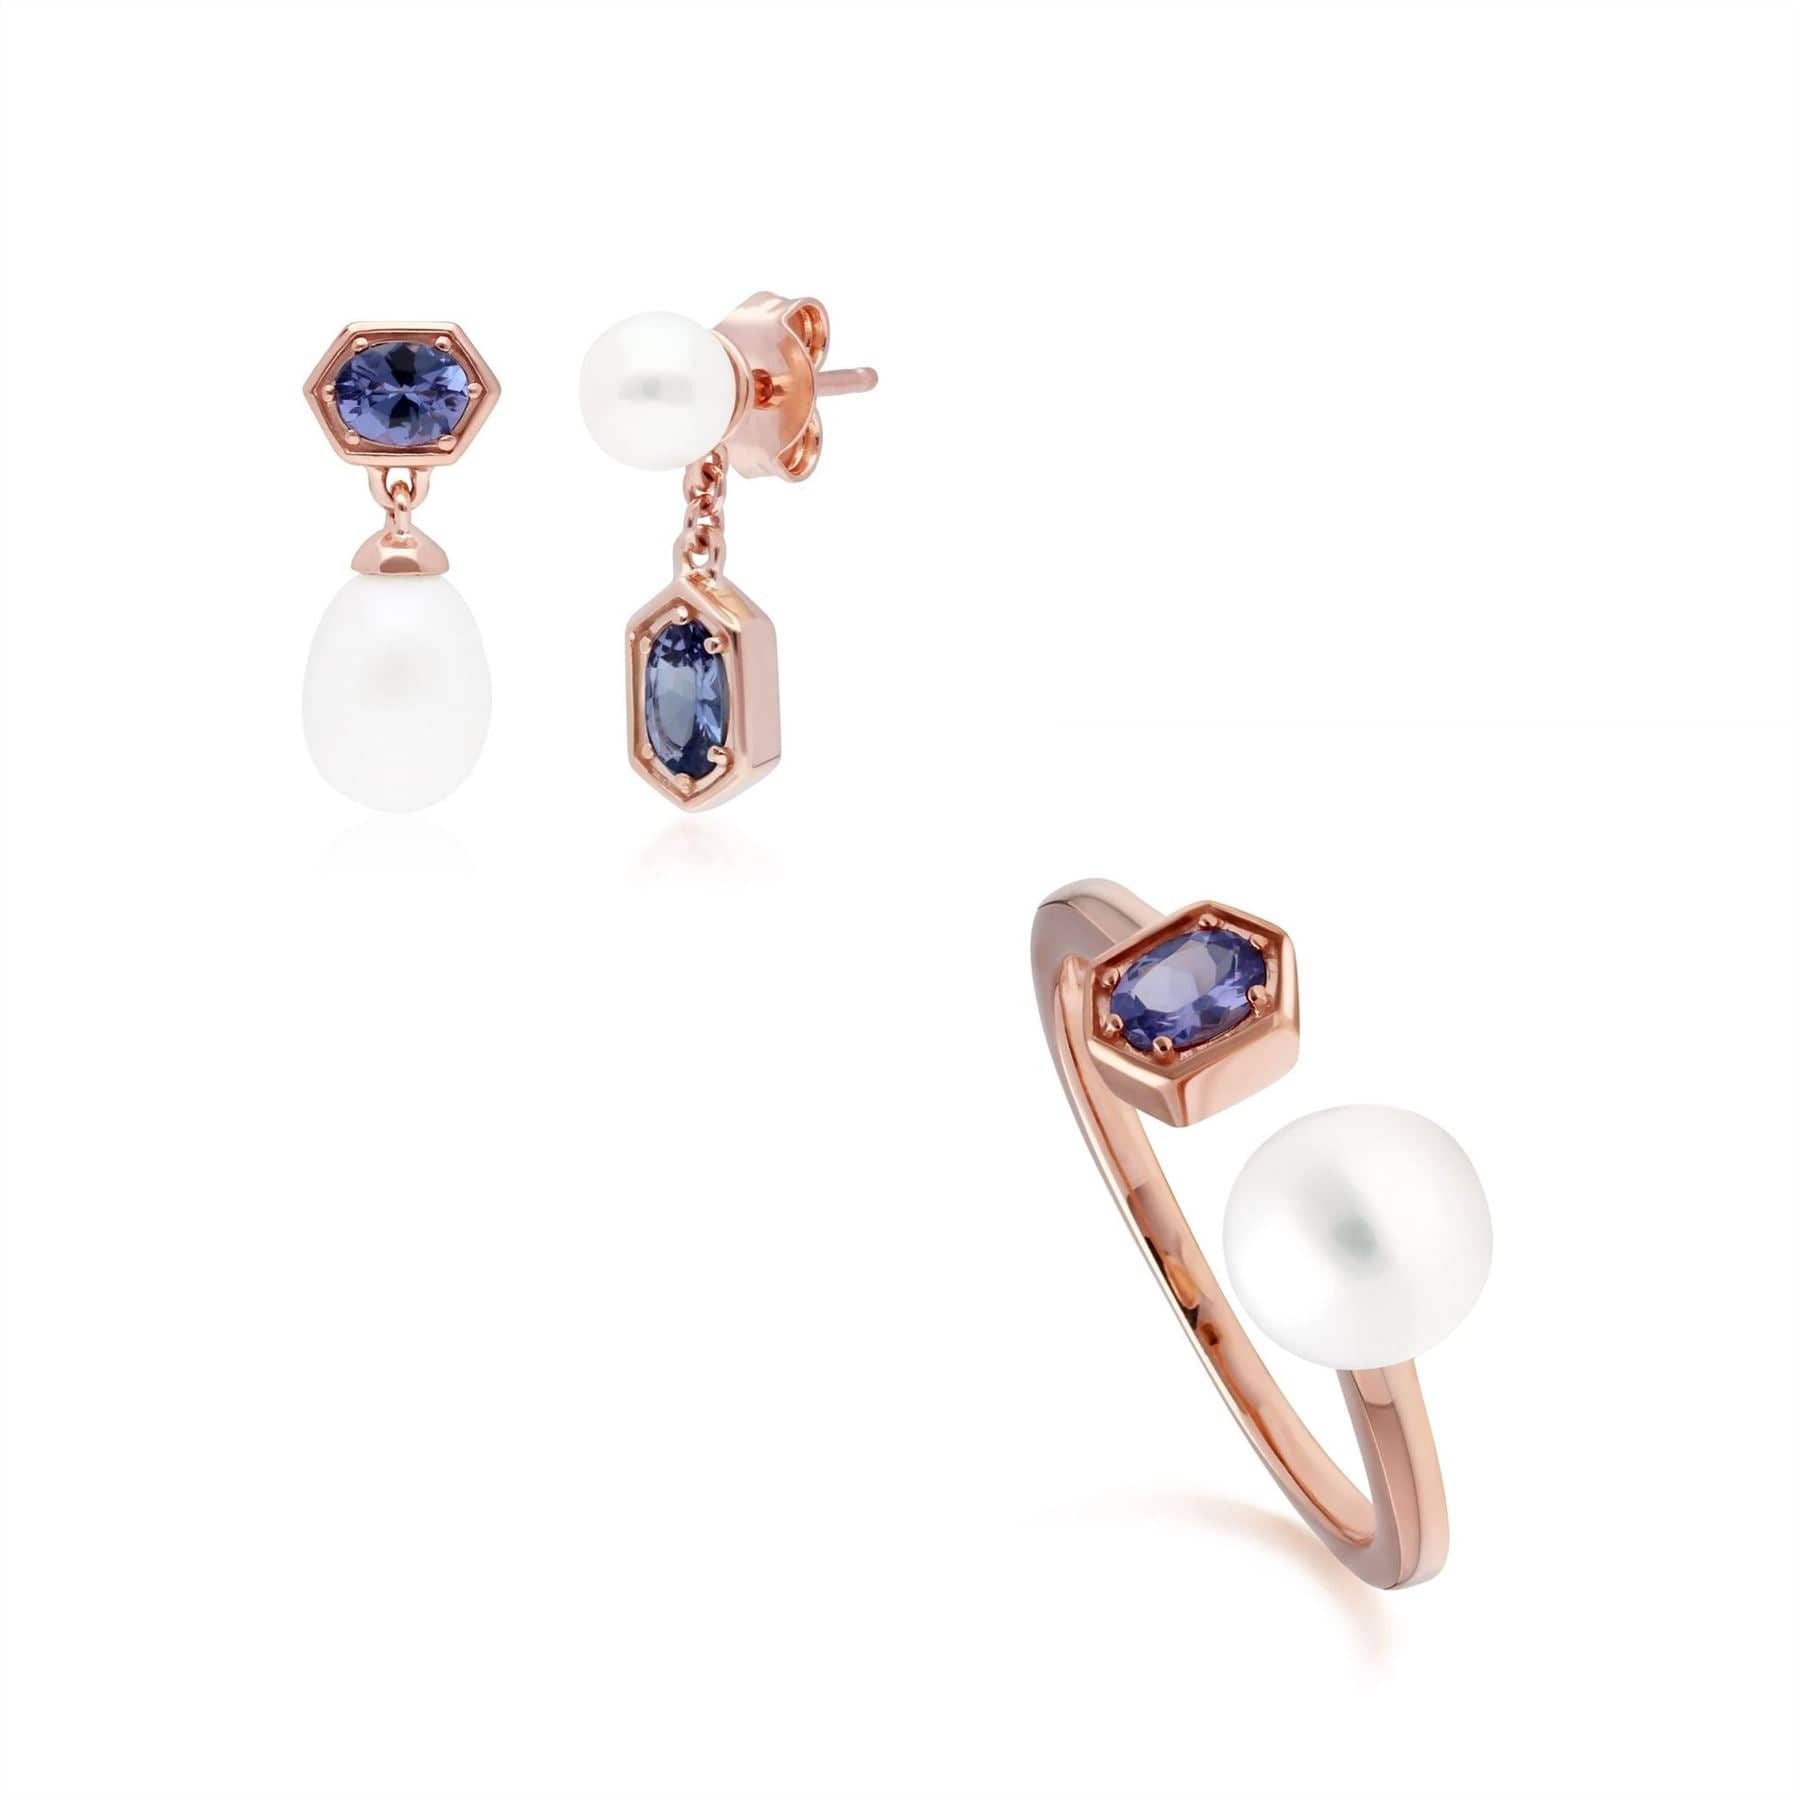 Modern Pearl & Tanzanite Earring & Ring Set in Rose Gold Plated Silver - Gemondo